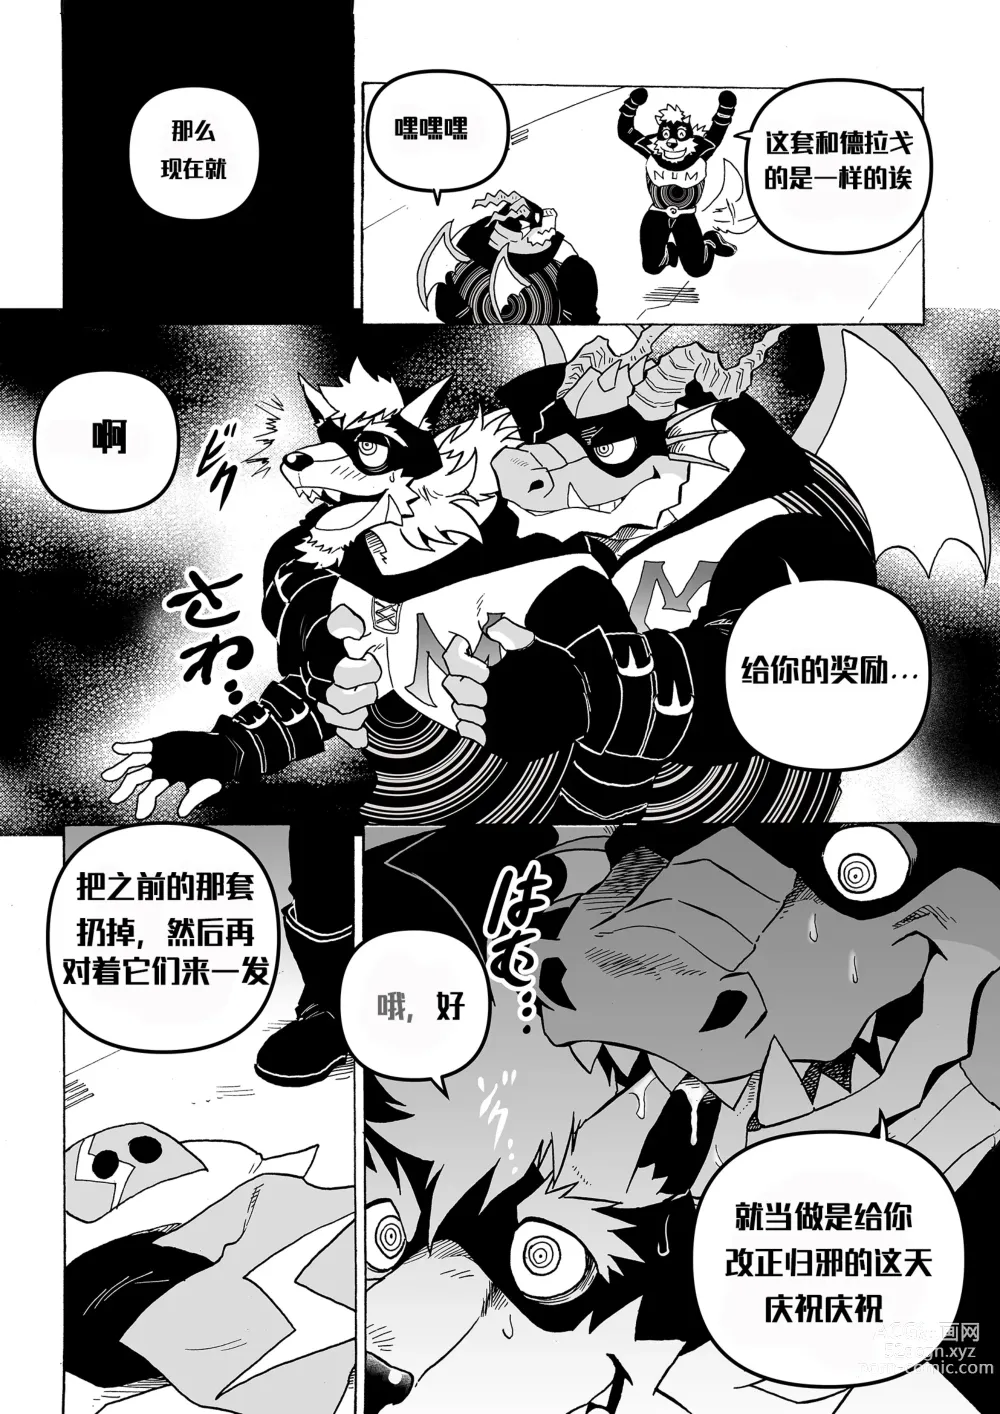 Page 62 of doujinshi 直至读心英雄恶堕为止『簡中翻訳』